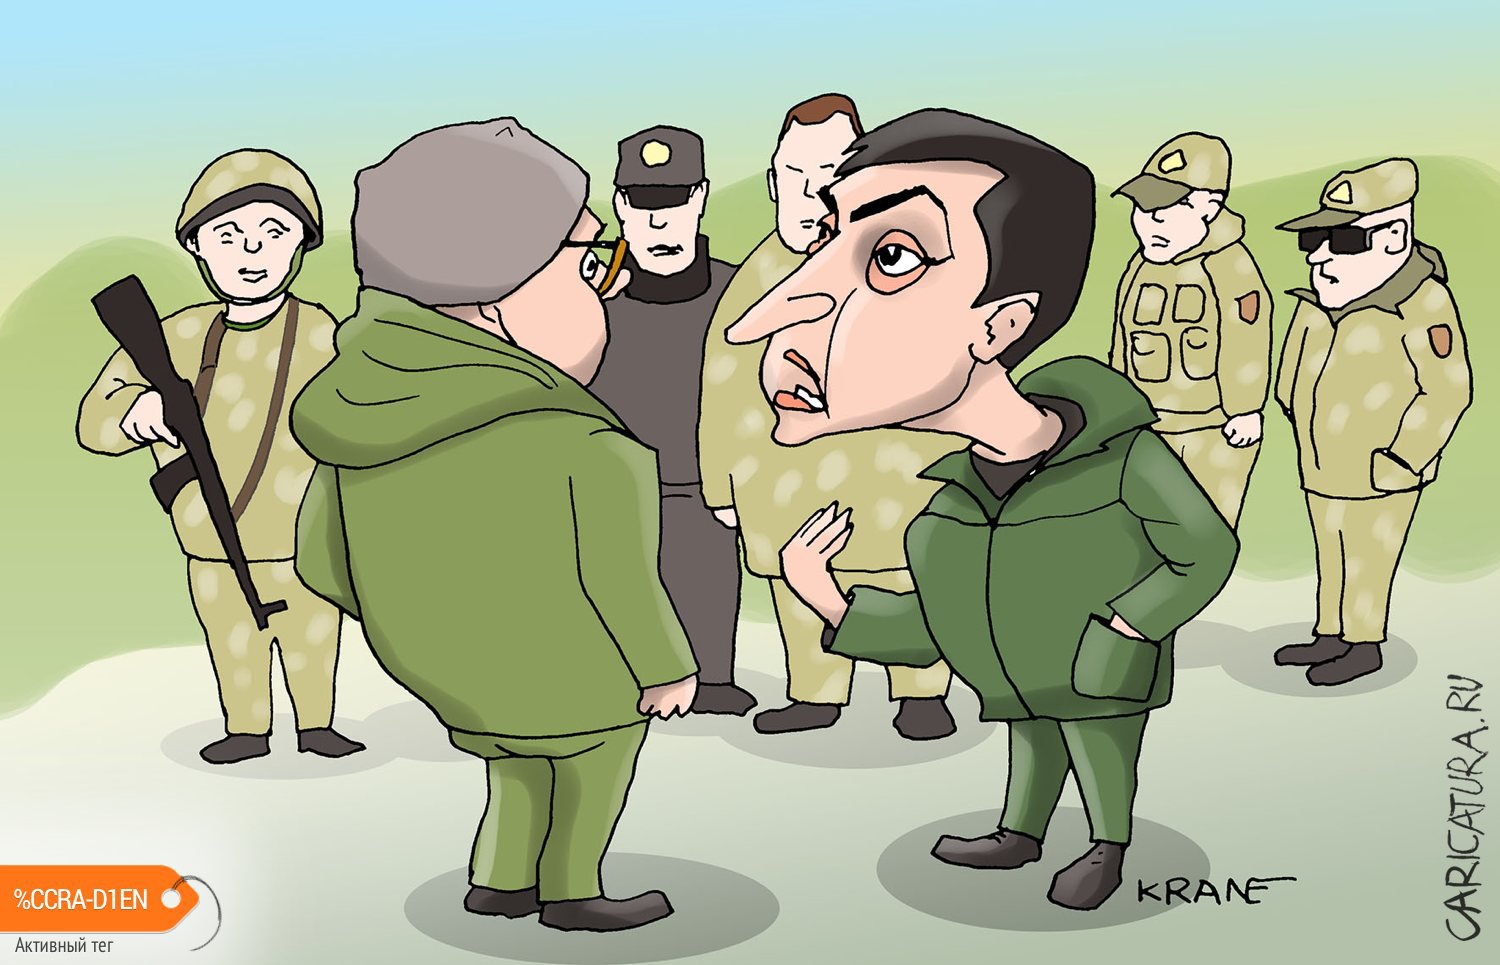 Карикатура "Уже не актер, но еще не червонец", Евгений Кран